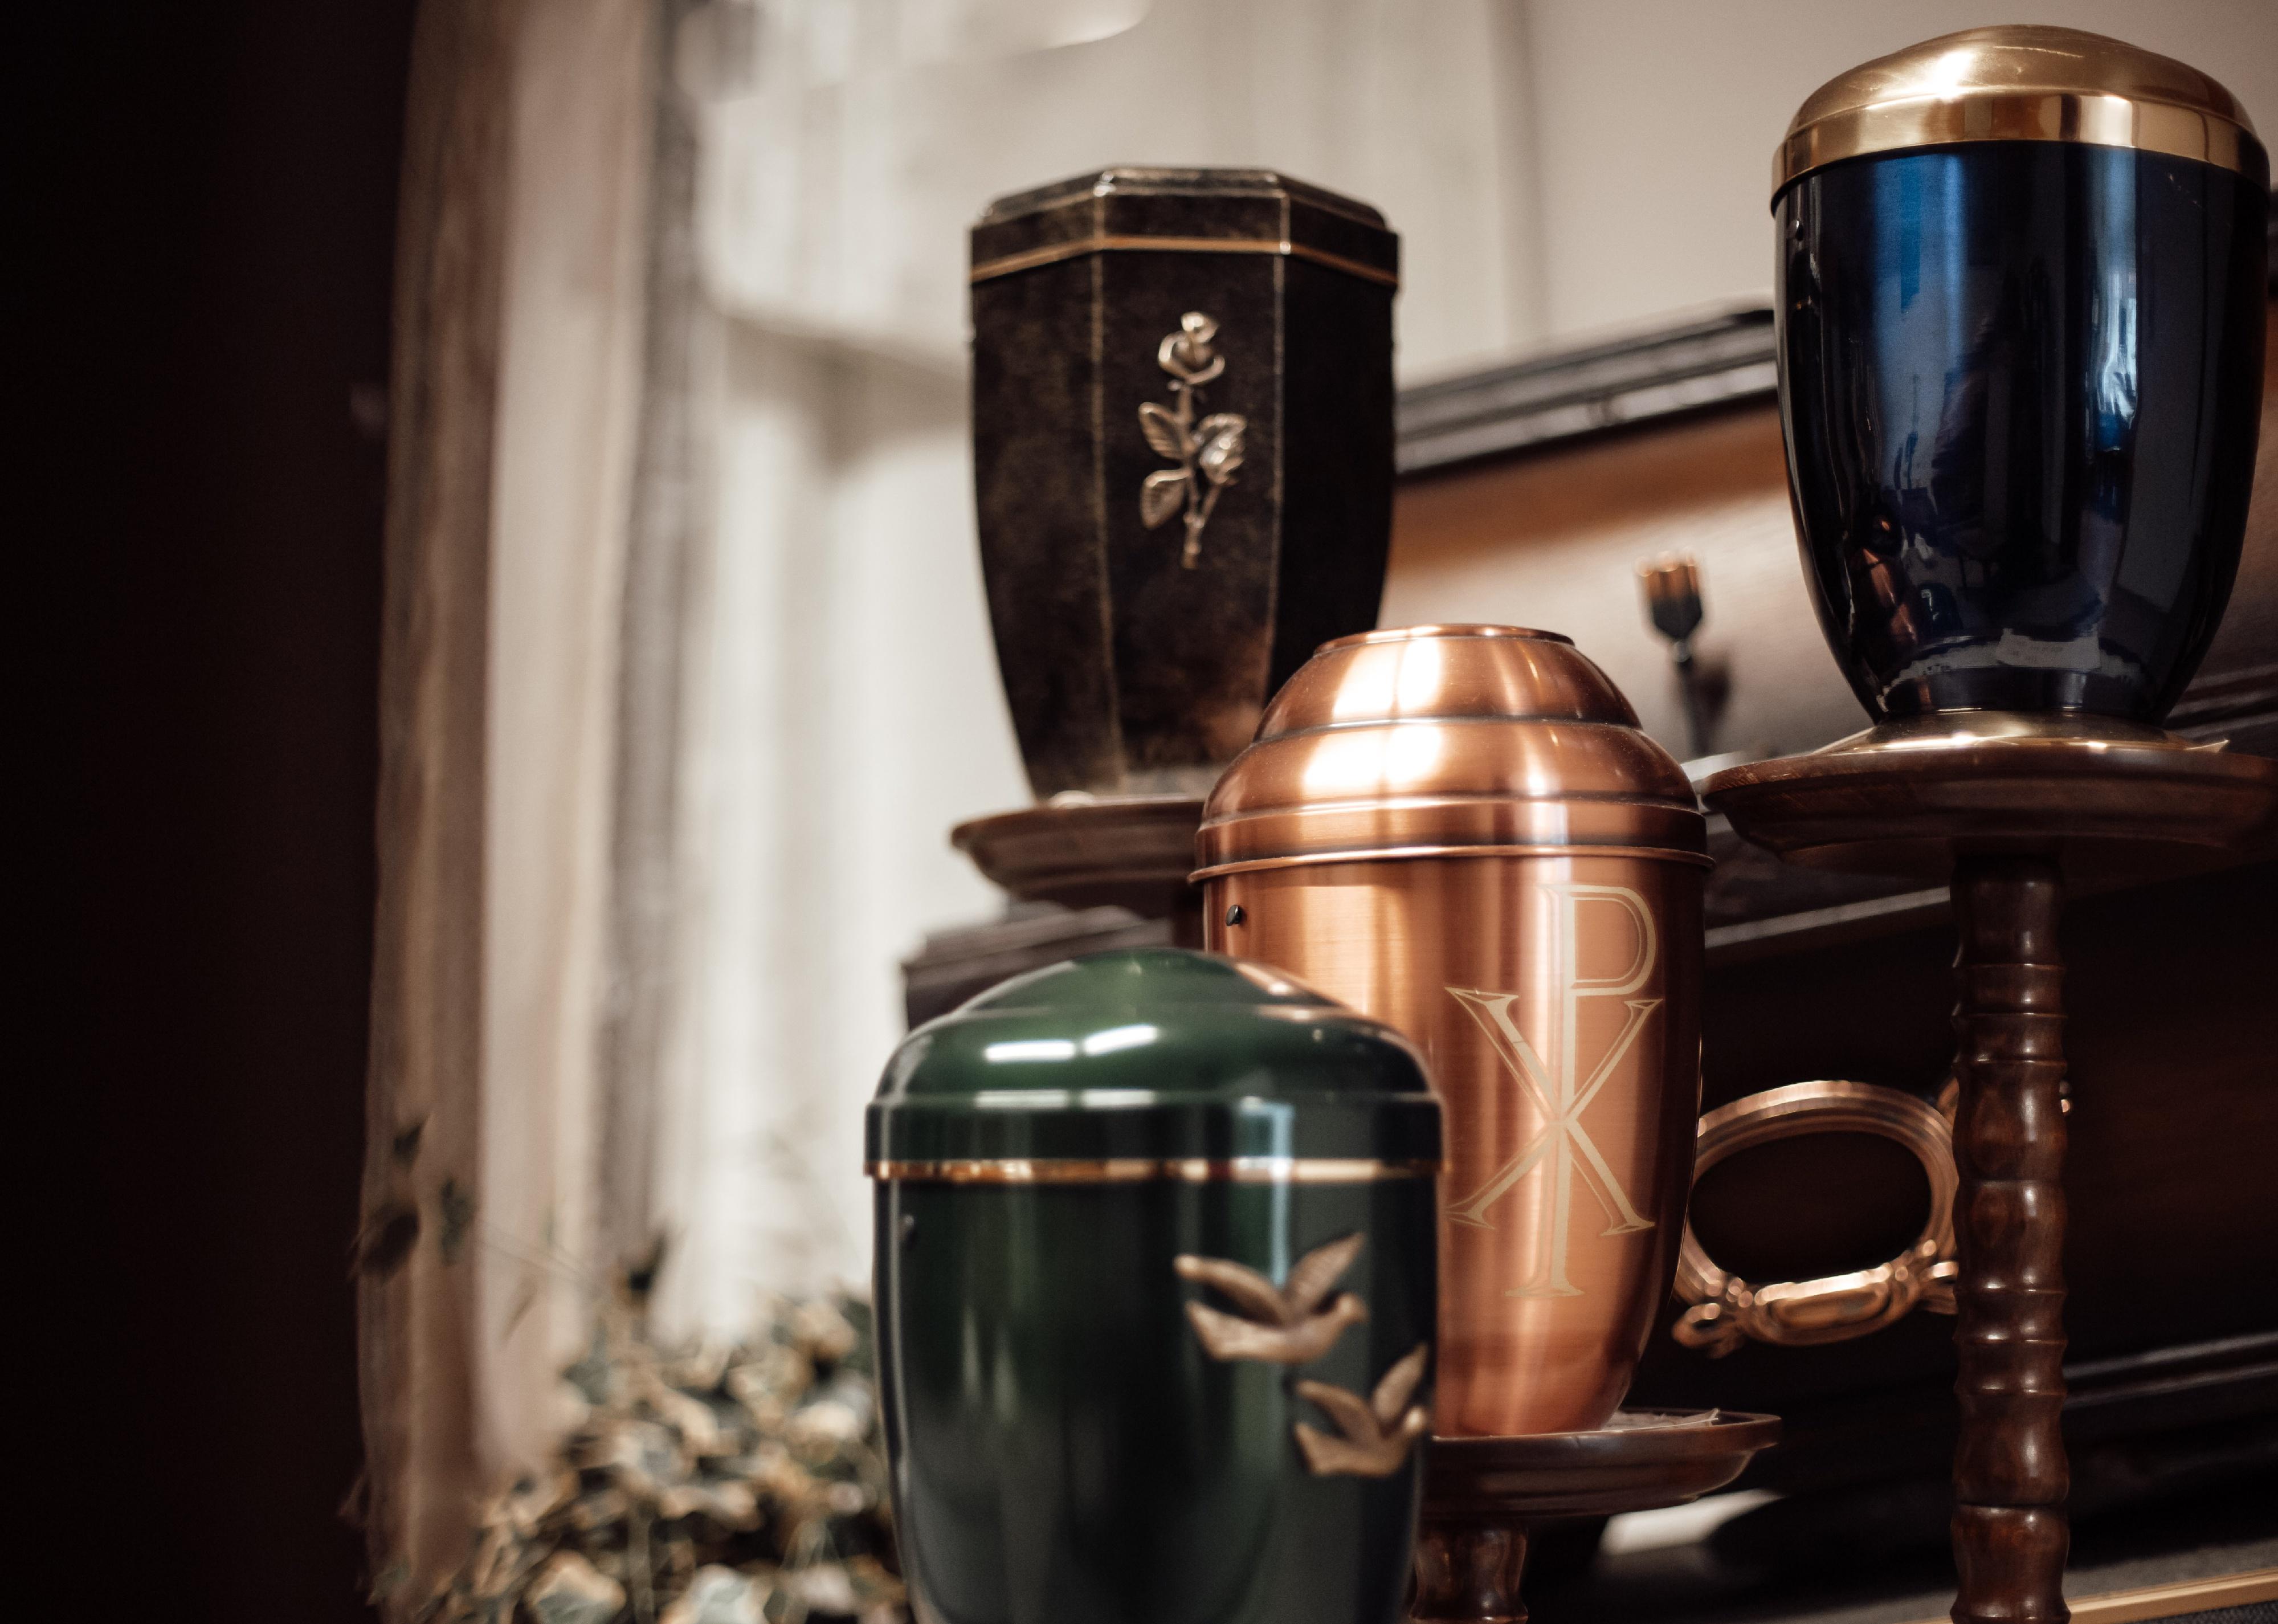 Decorative urns sit on display.